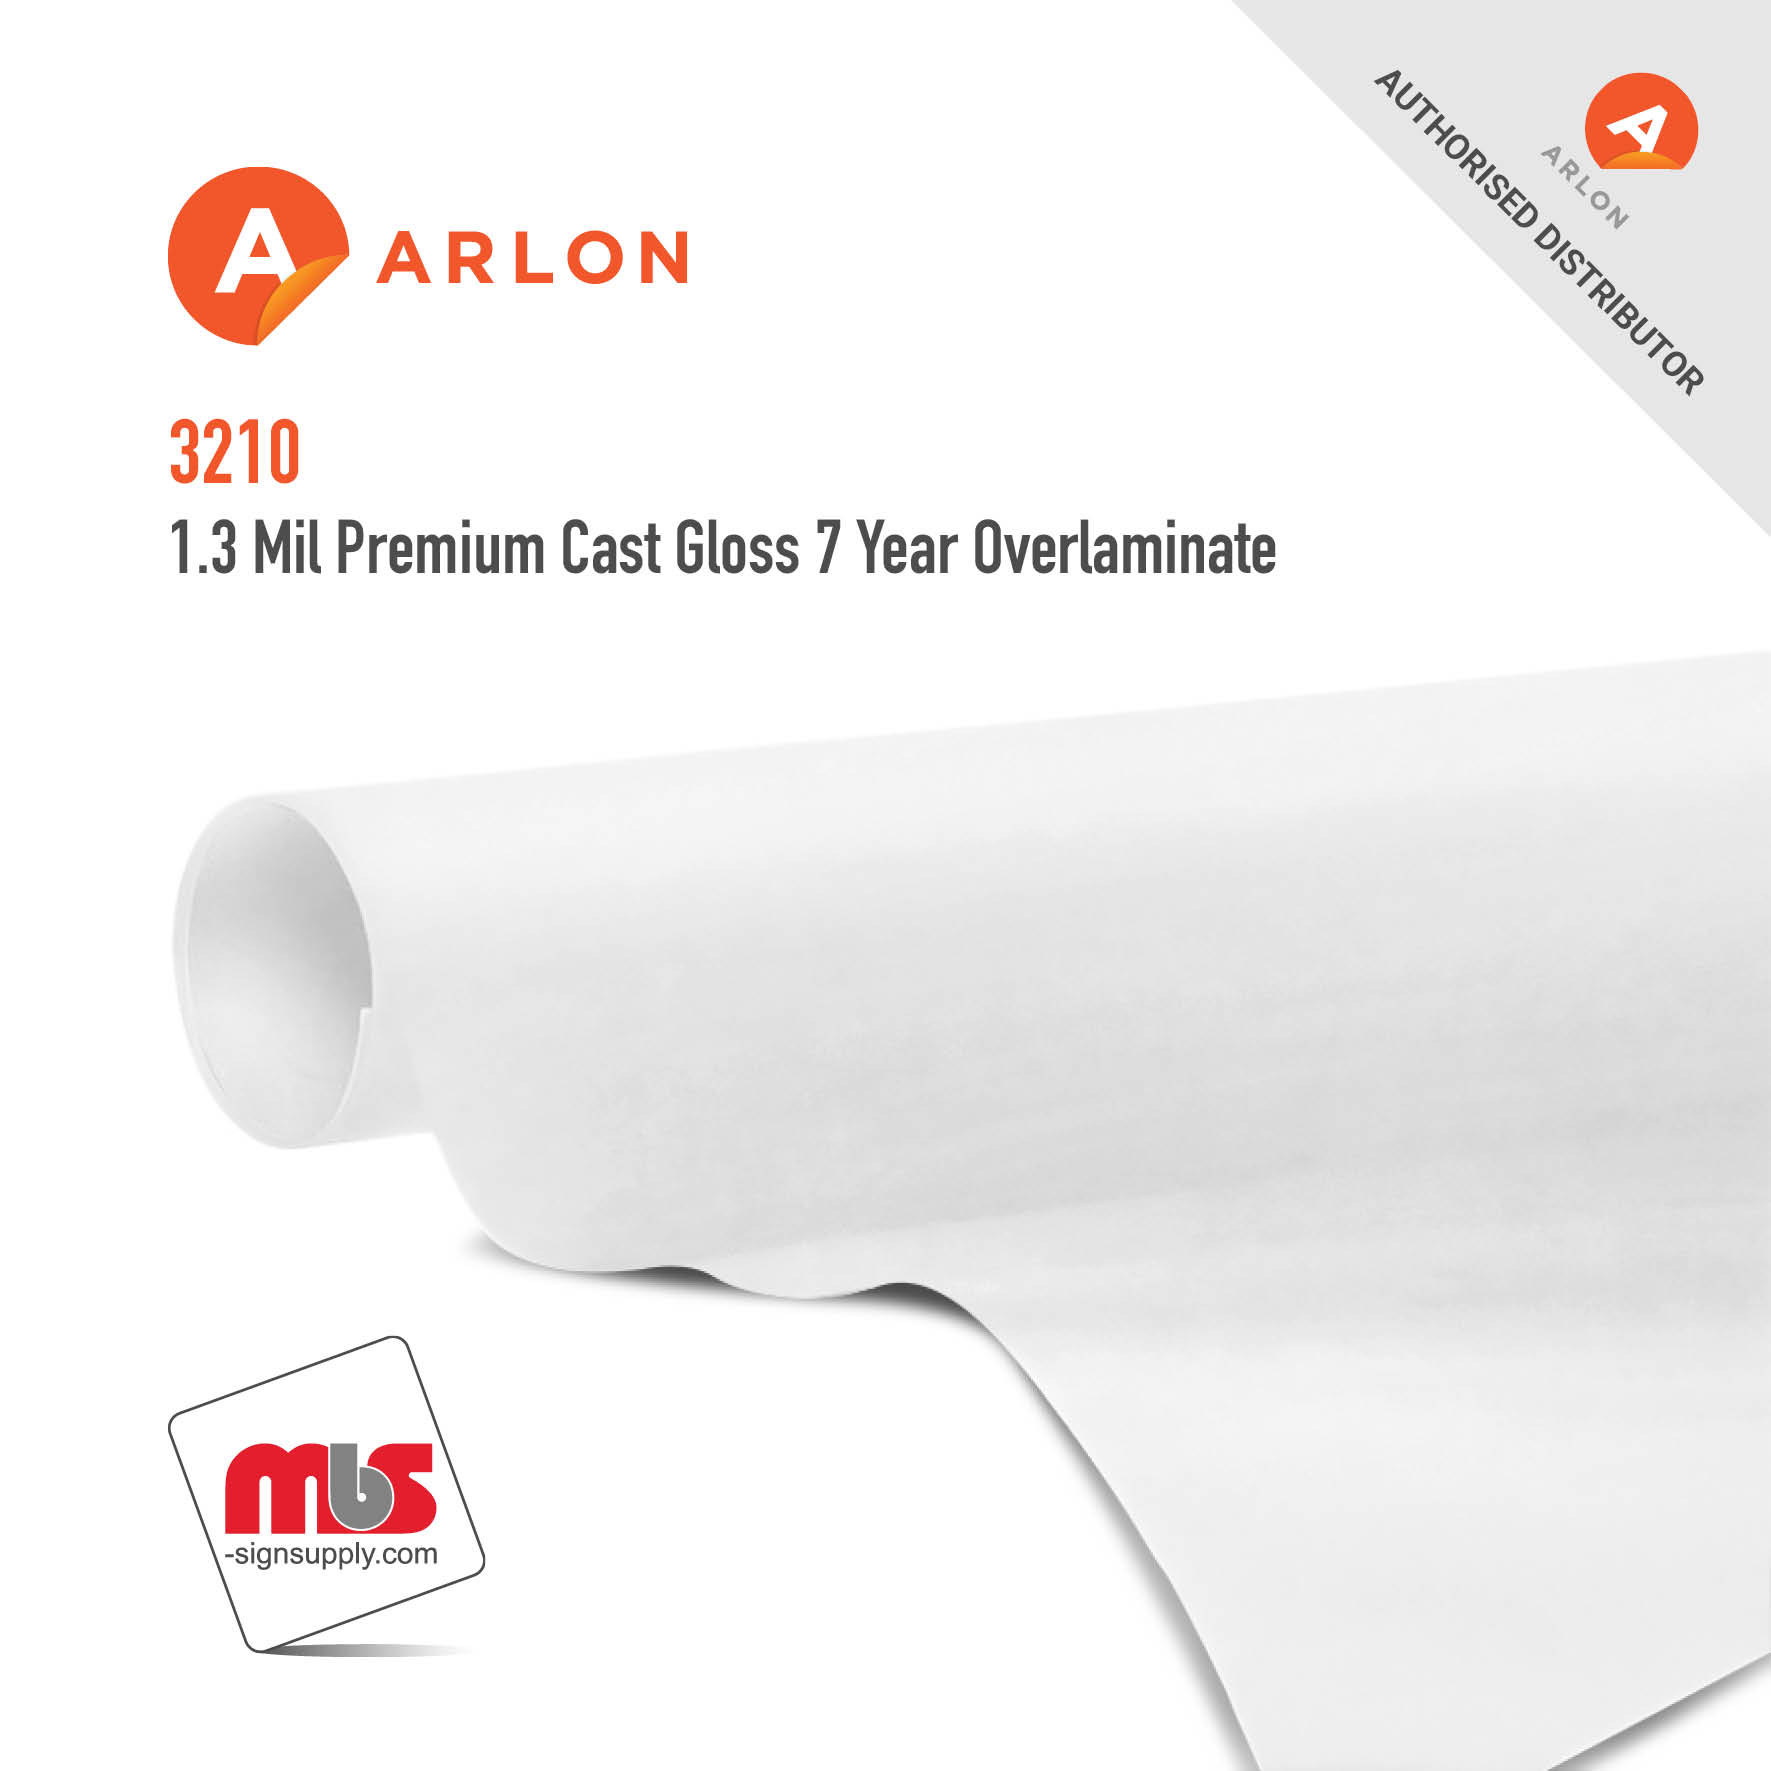 54'' x 75 Yard Roll - Arlon 3710 1.3 Mil Premium Cast Gloss 7 Year Overlaminate